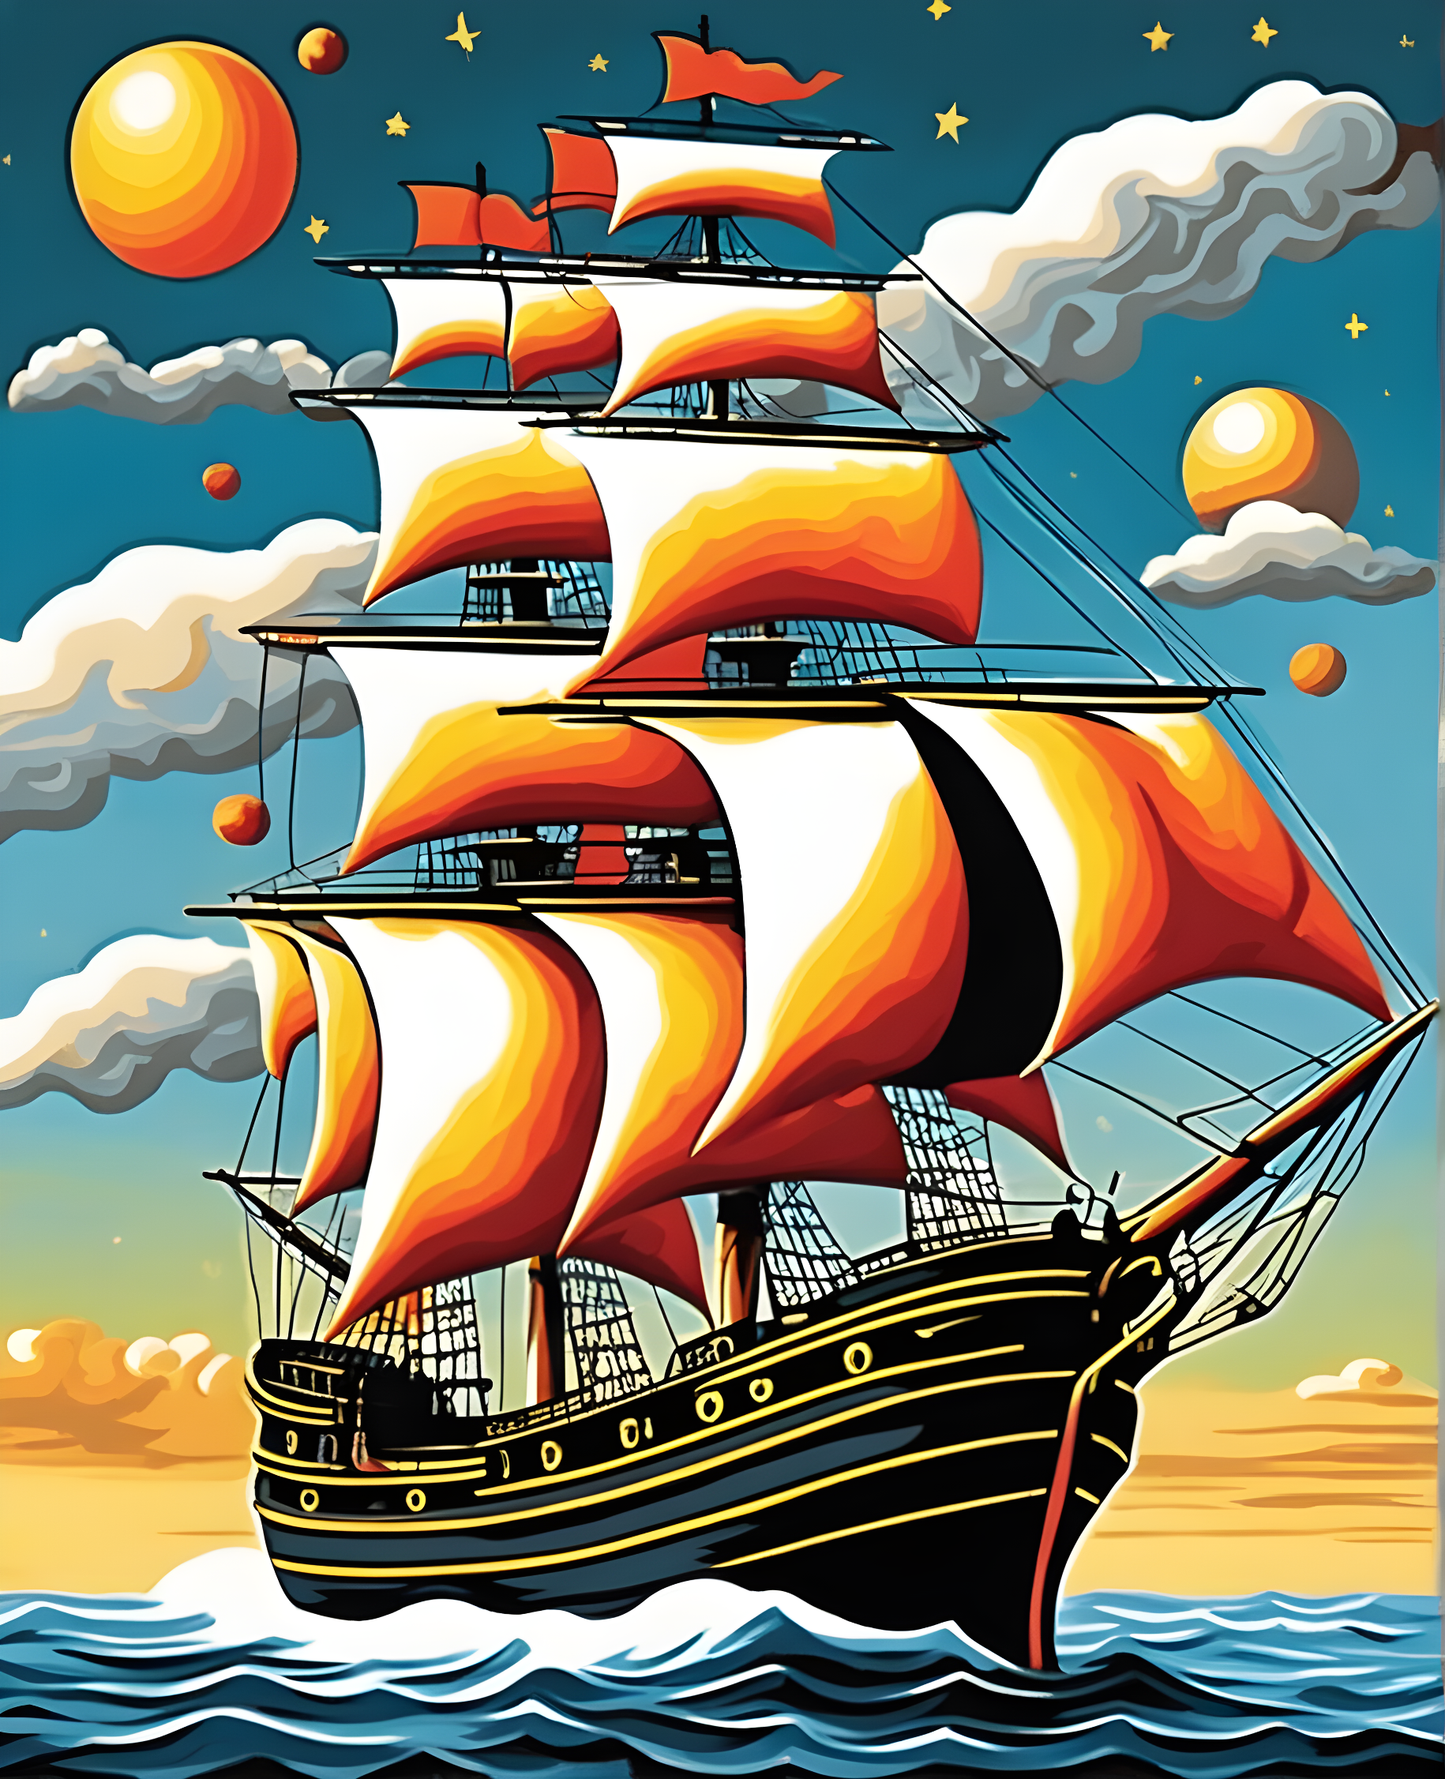 Ship of Dreams - Van-Go Paint-By-Number Kit